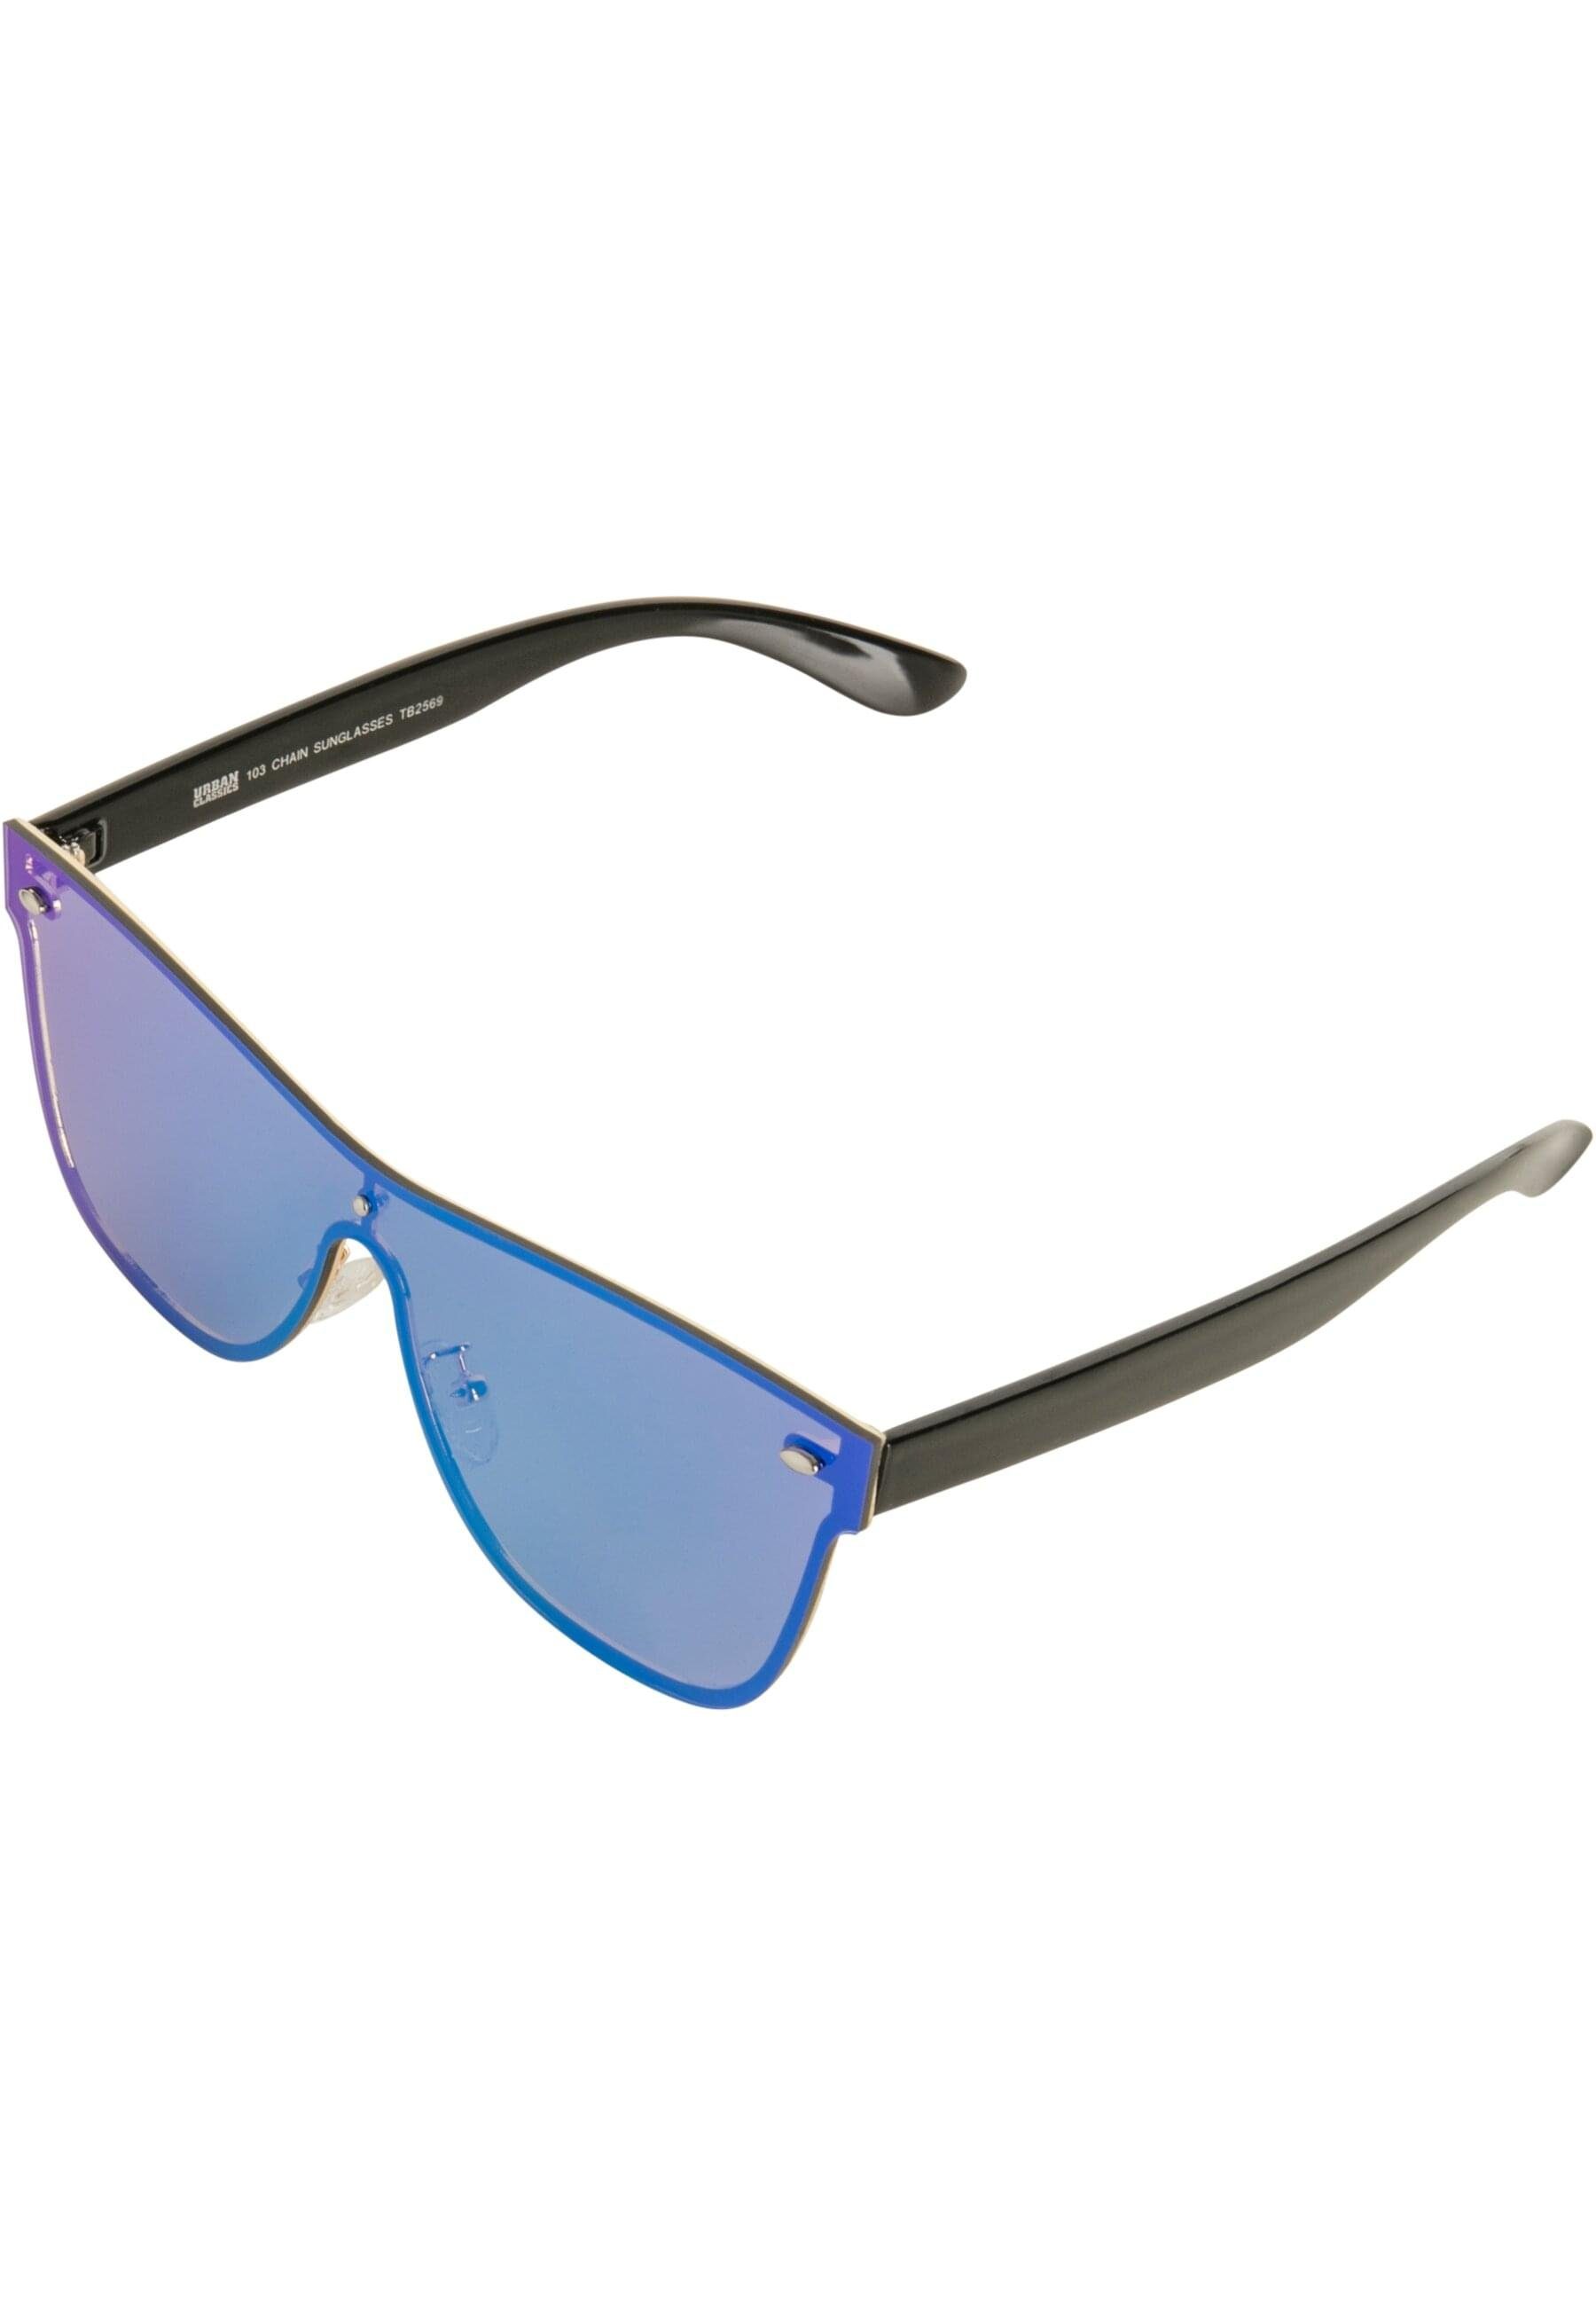 Sonnenbrille 103 blk/blue Sunglasses CLASSICS Unisex URBAN Chain